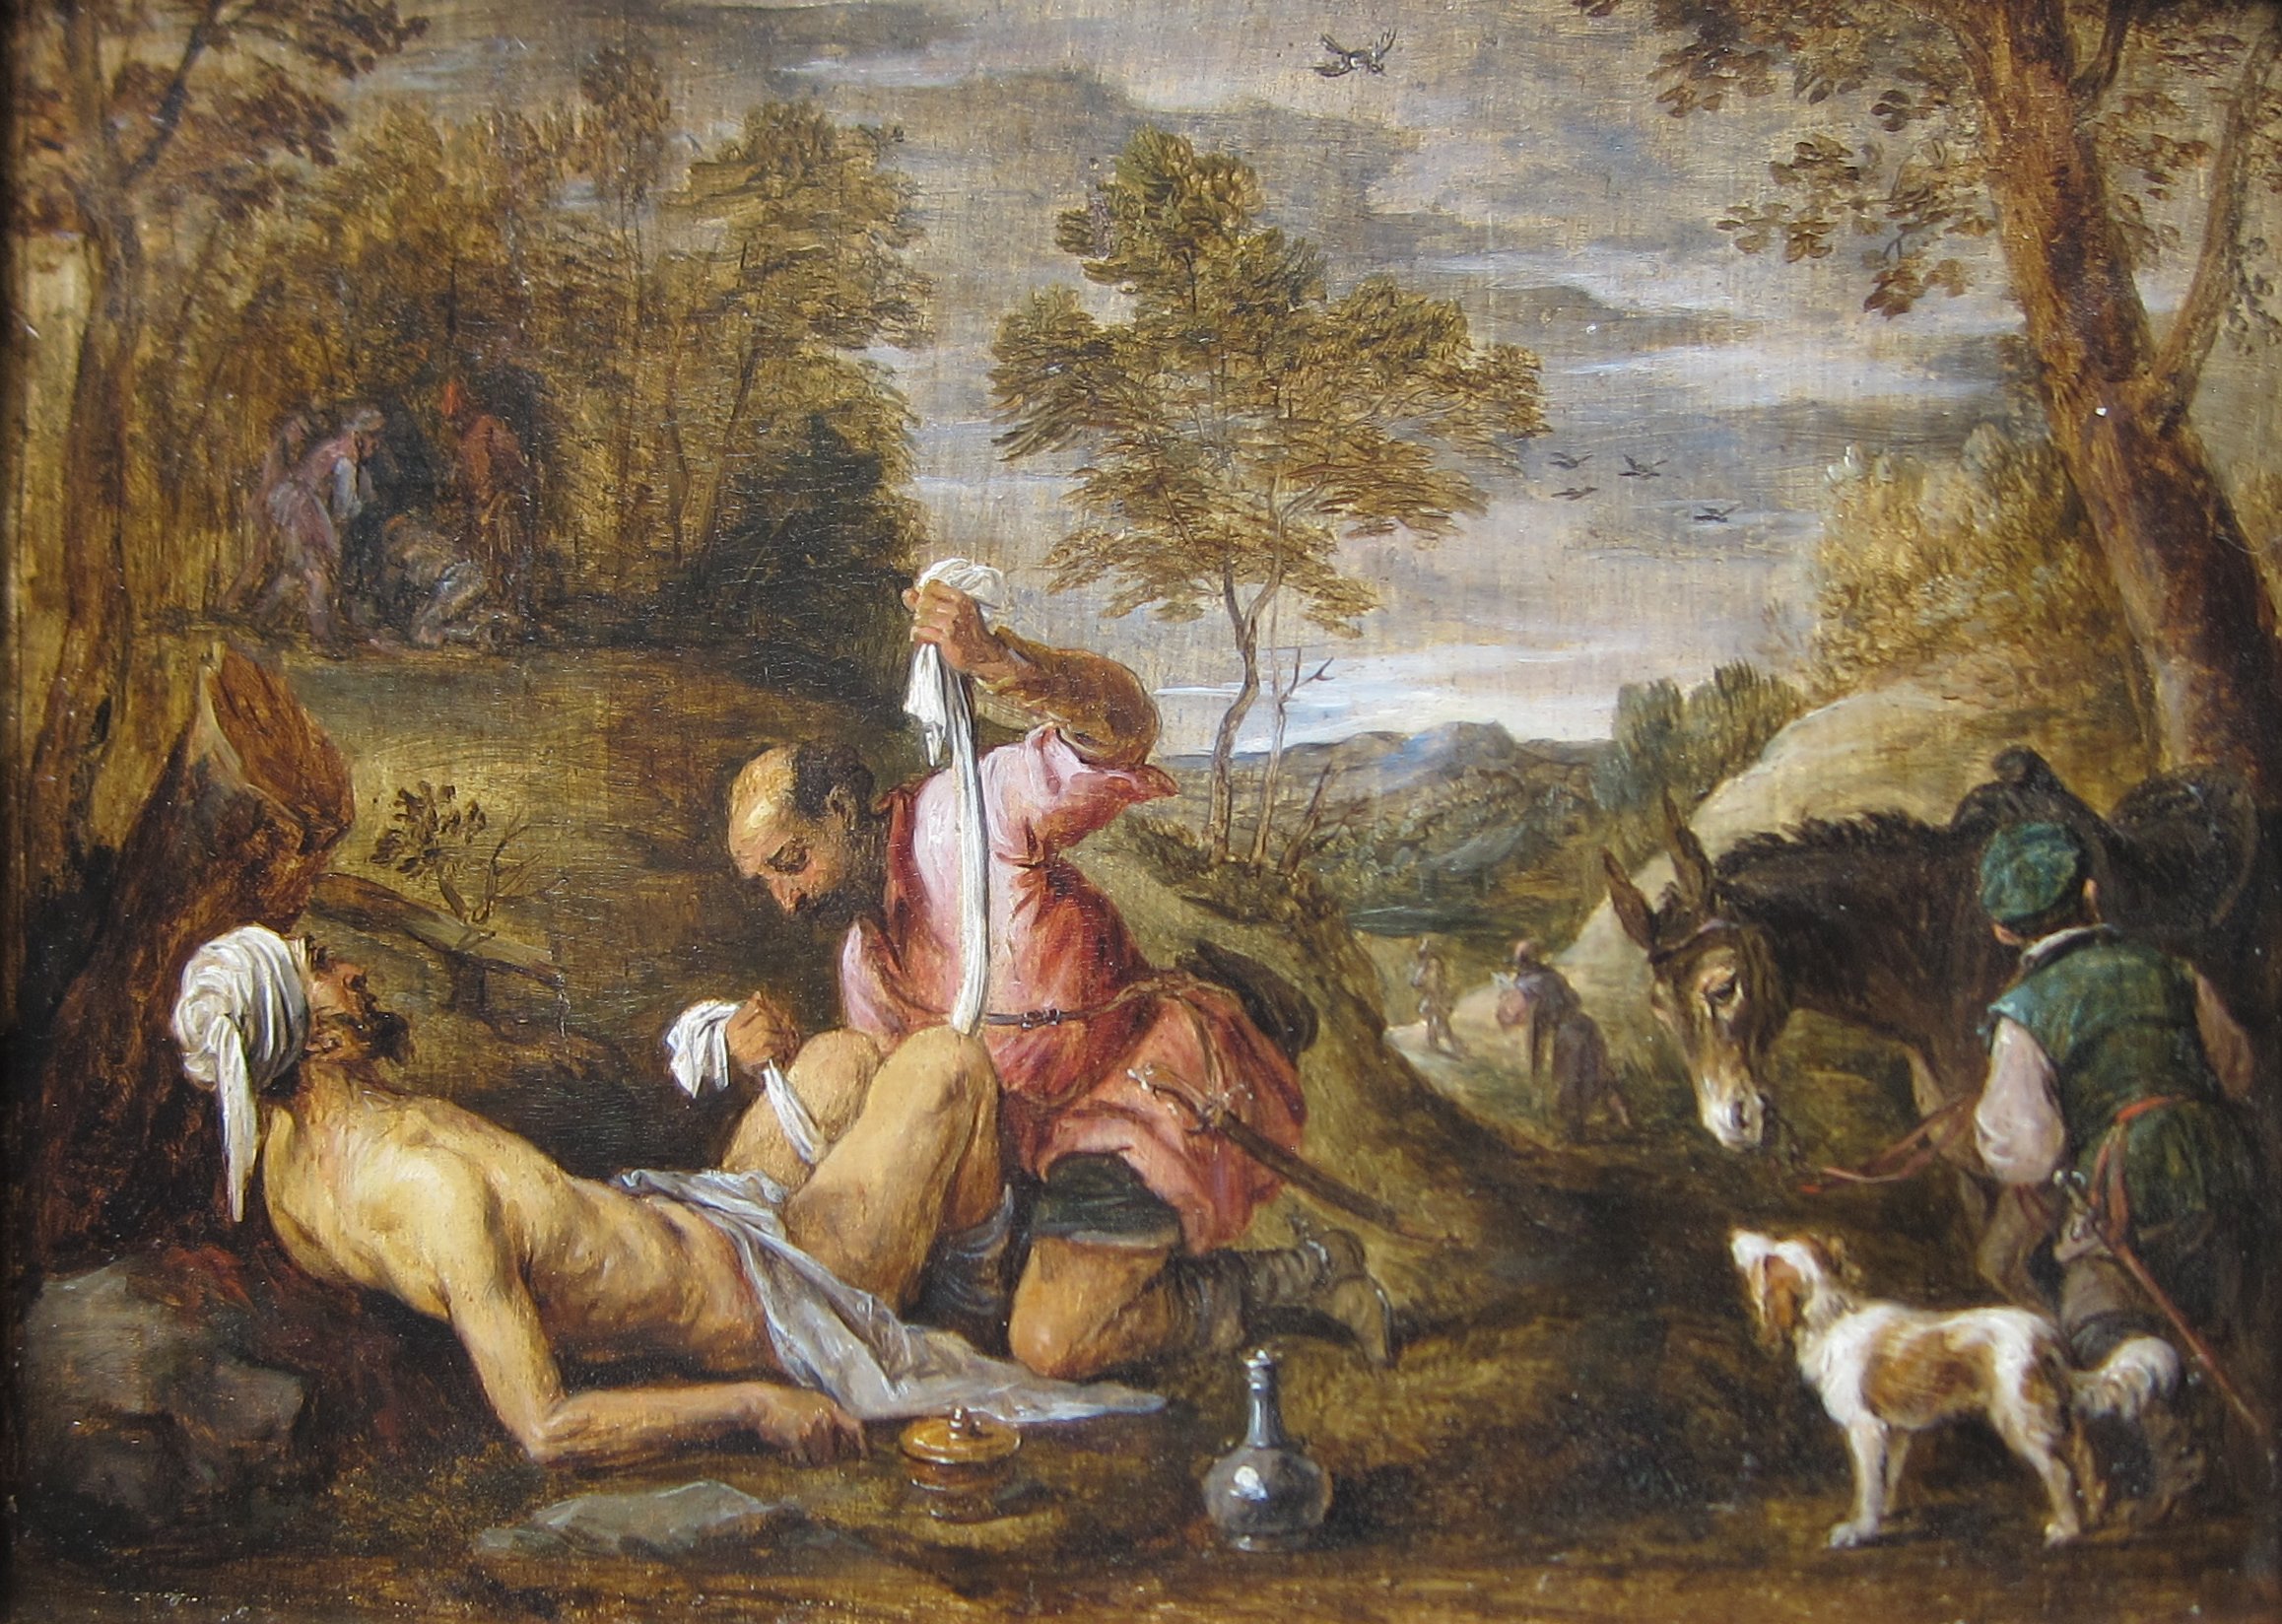 'The_Good_Samaritan'_by_David_Teniers_the_younger_after_Francesco_Bassano